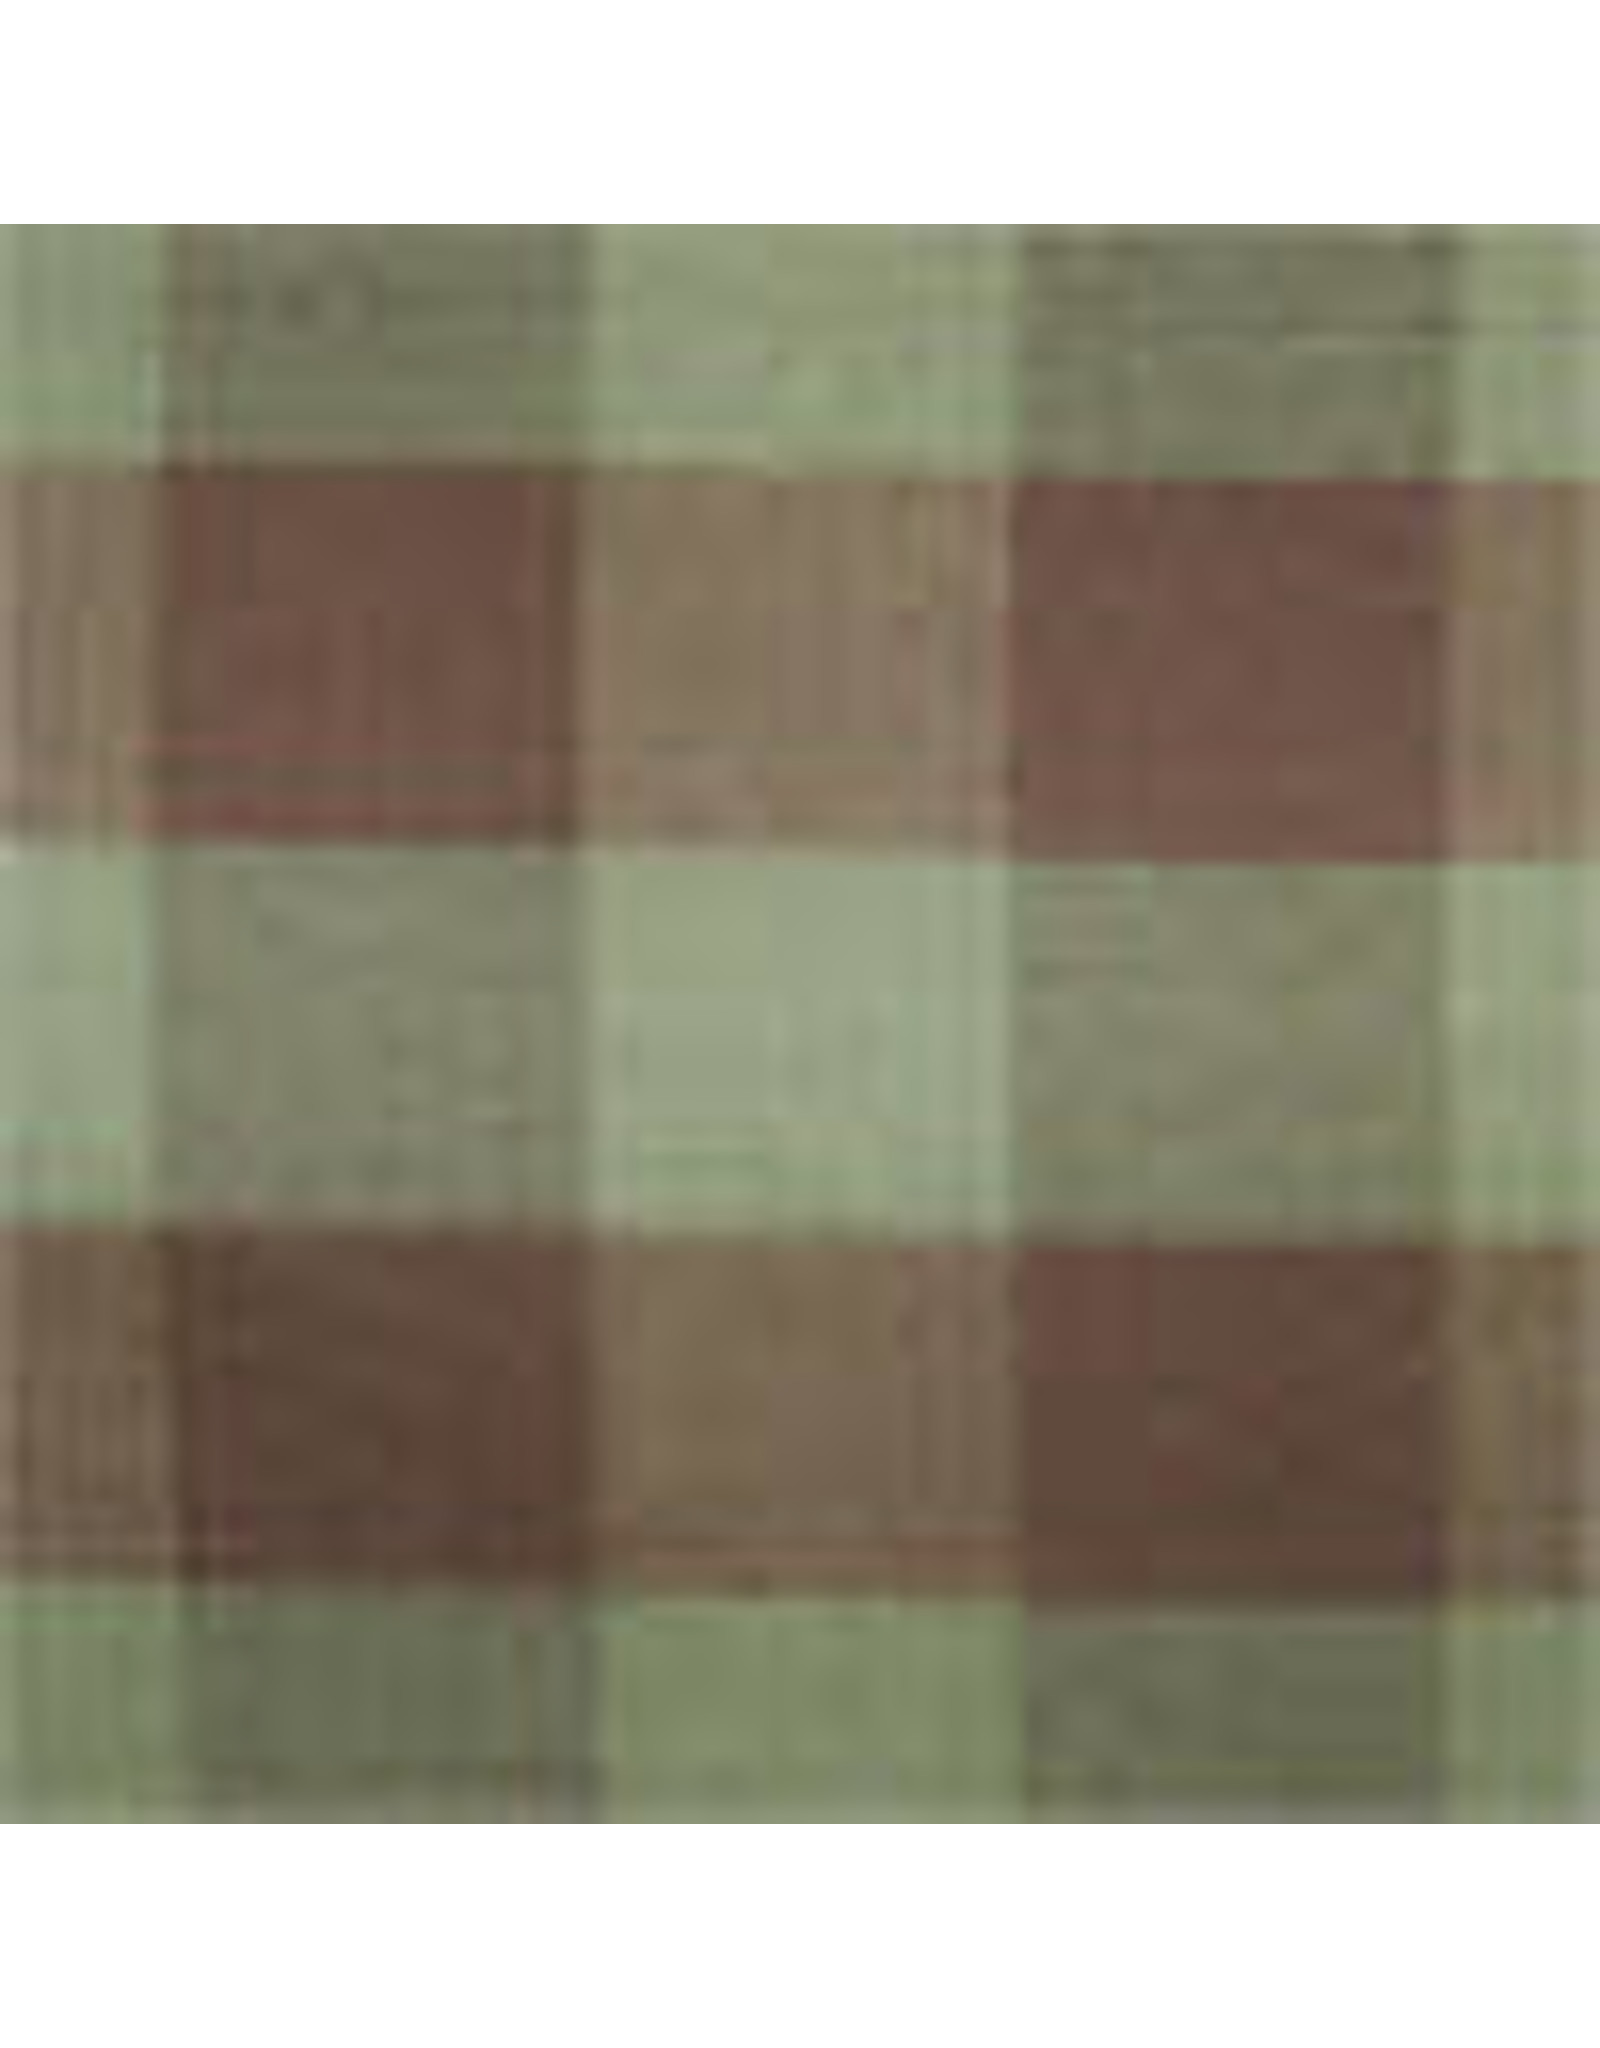 Yd. Brown and Tan Buffalo Check Fabric #990